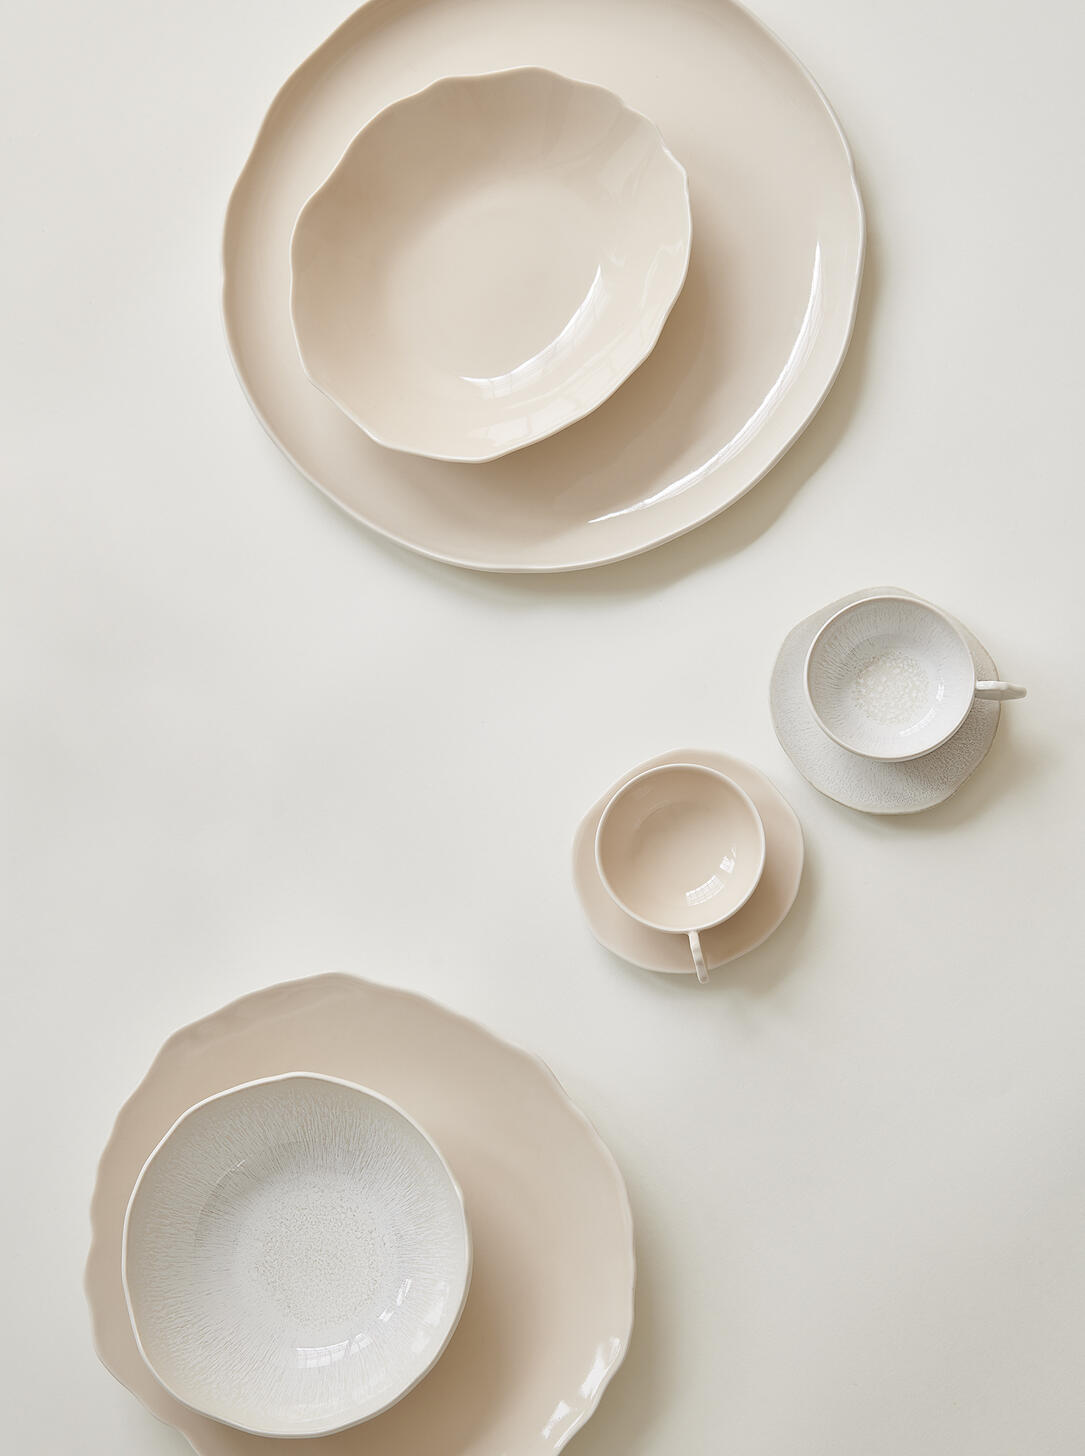 cup & saucer - m plume atoll ceramic manufacturer